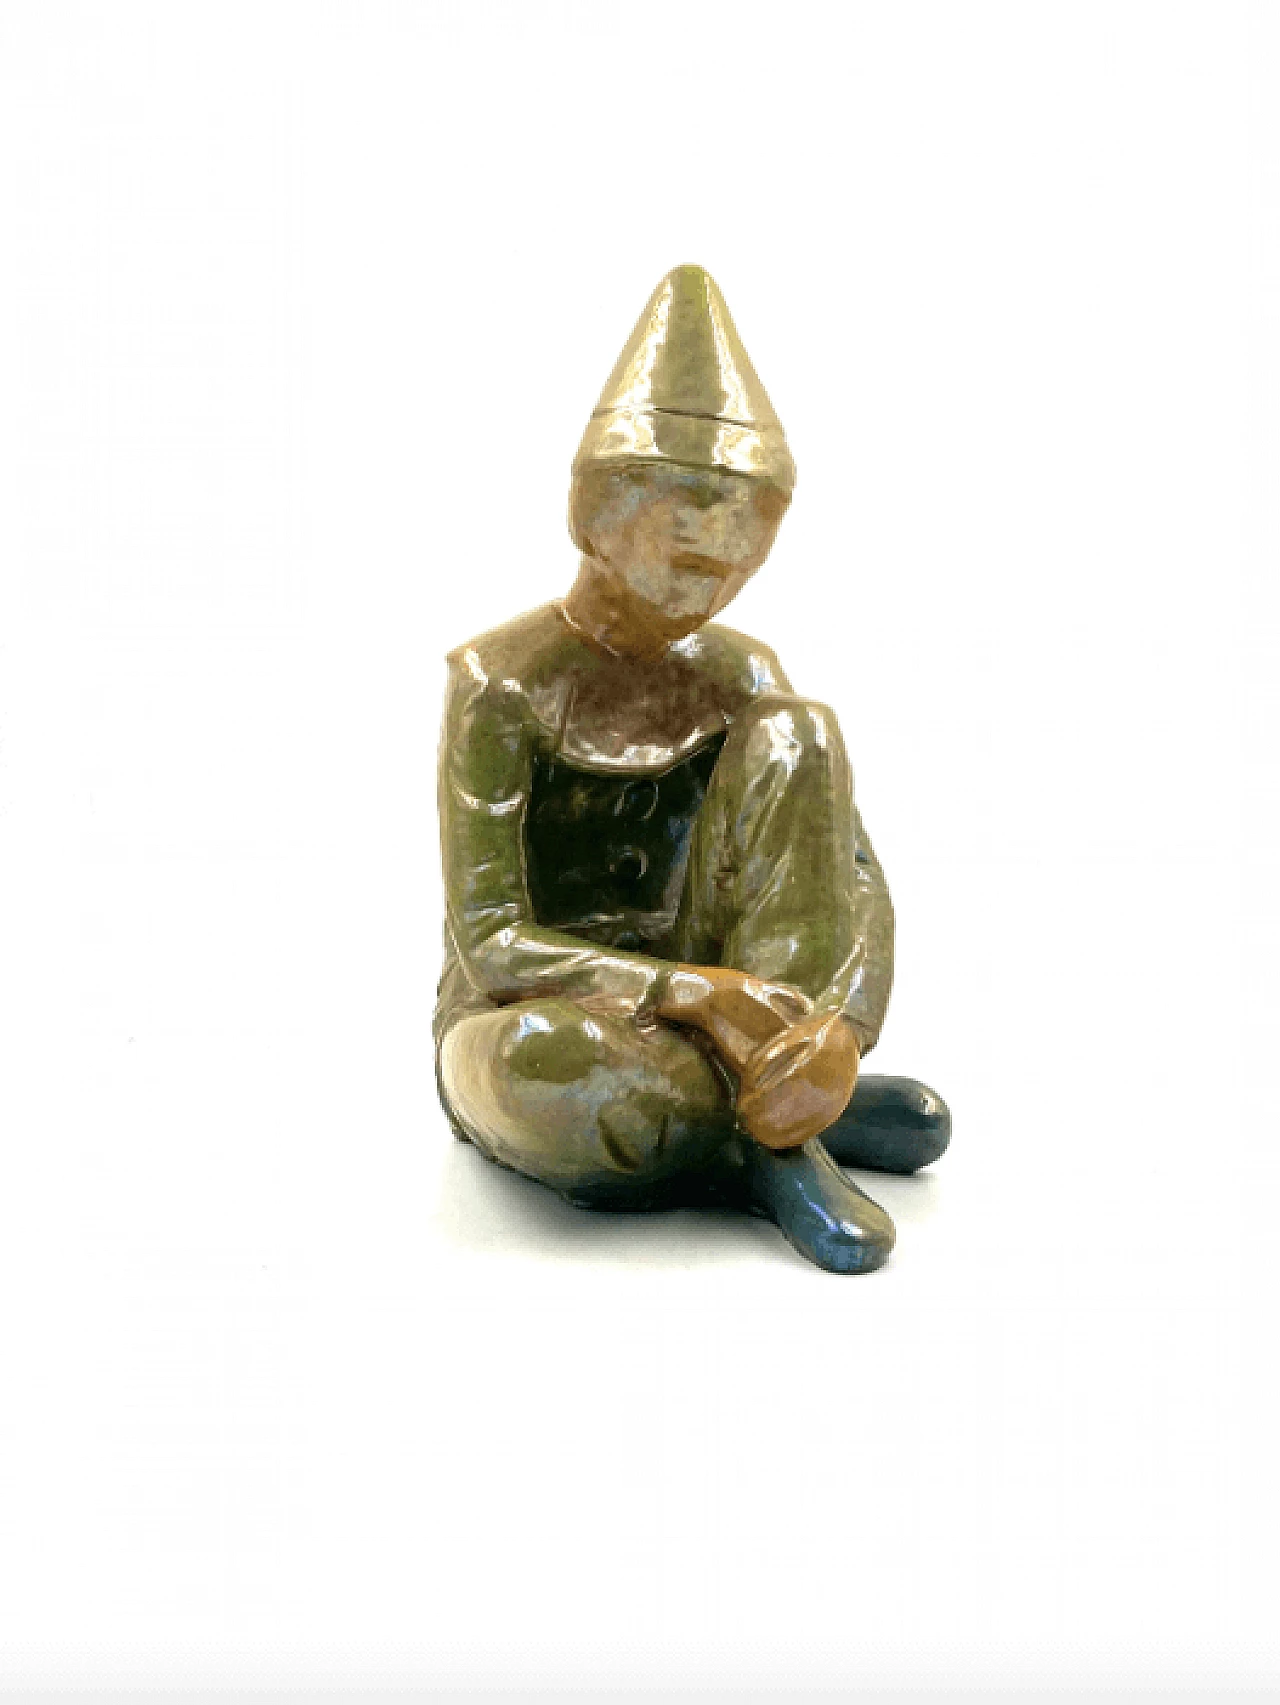 Giordano Tronconi, Seated boy, green ceramic figure from Faenza, 1950s 57